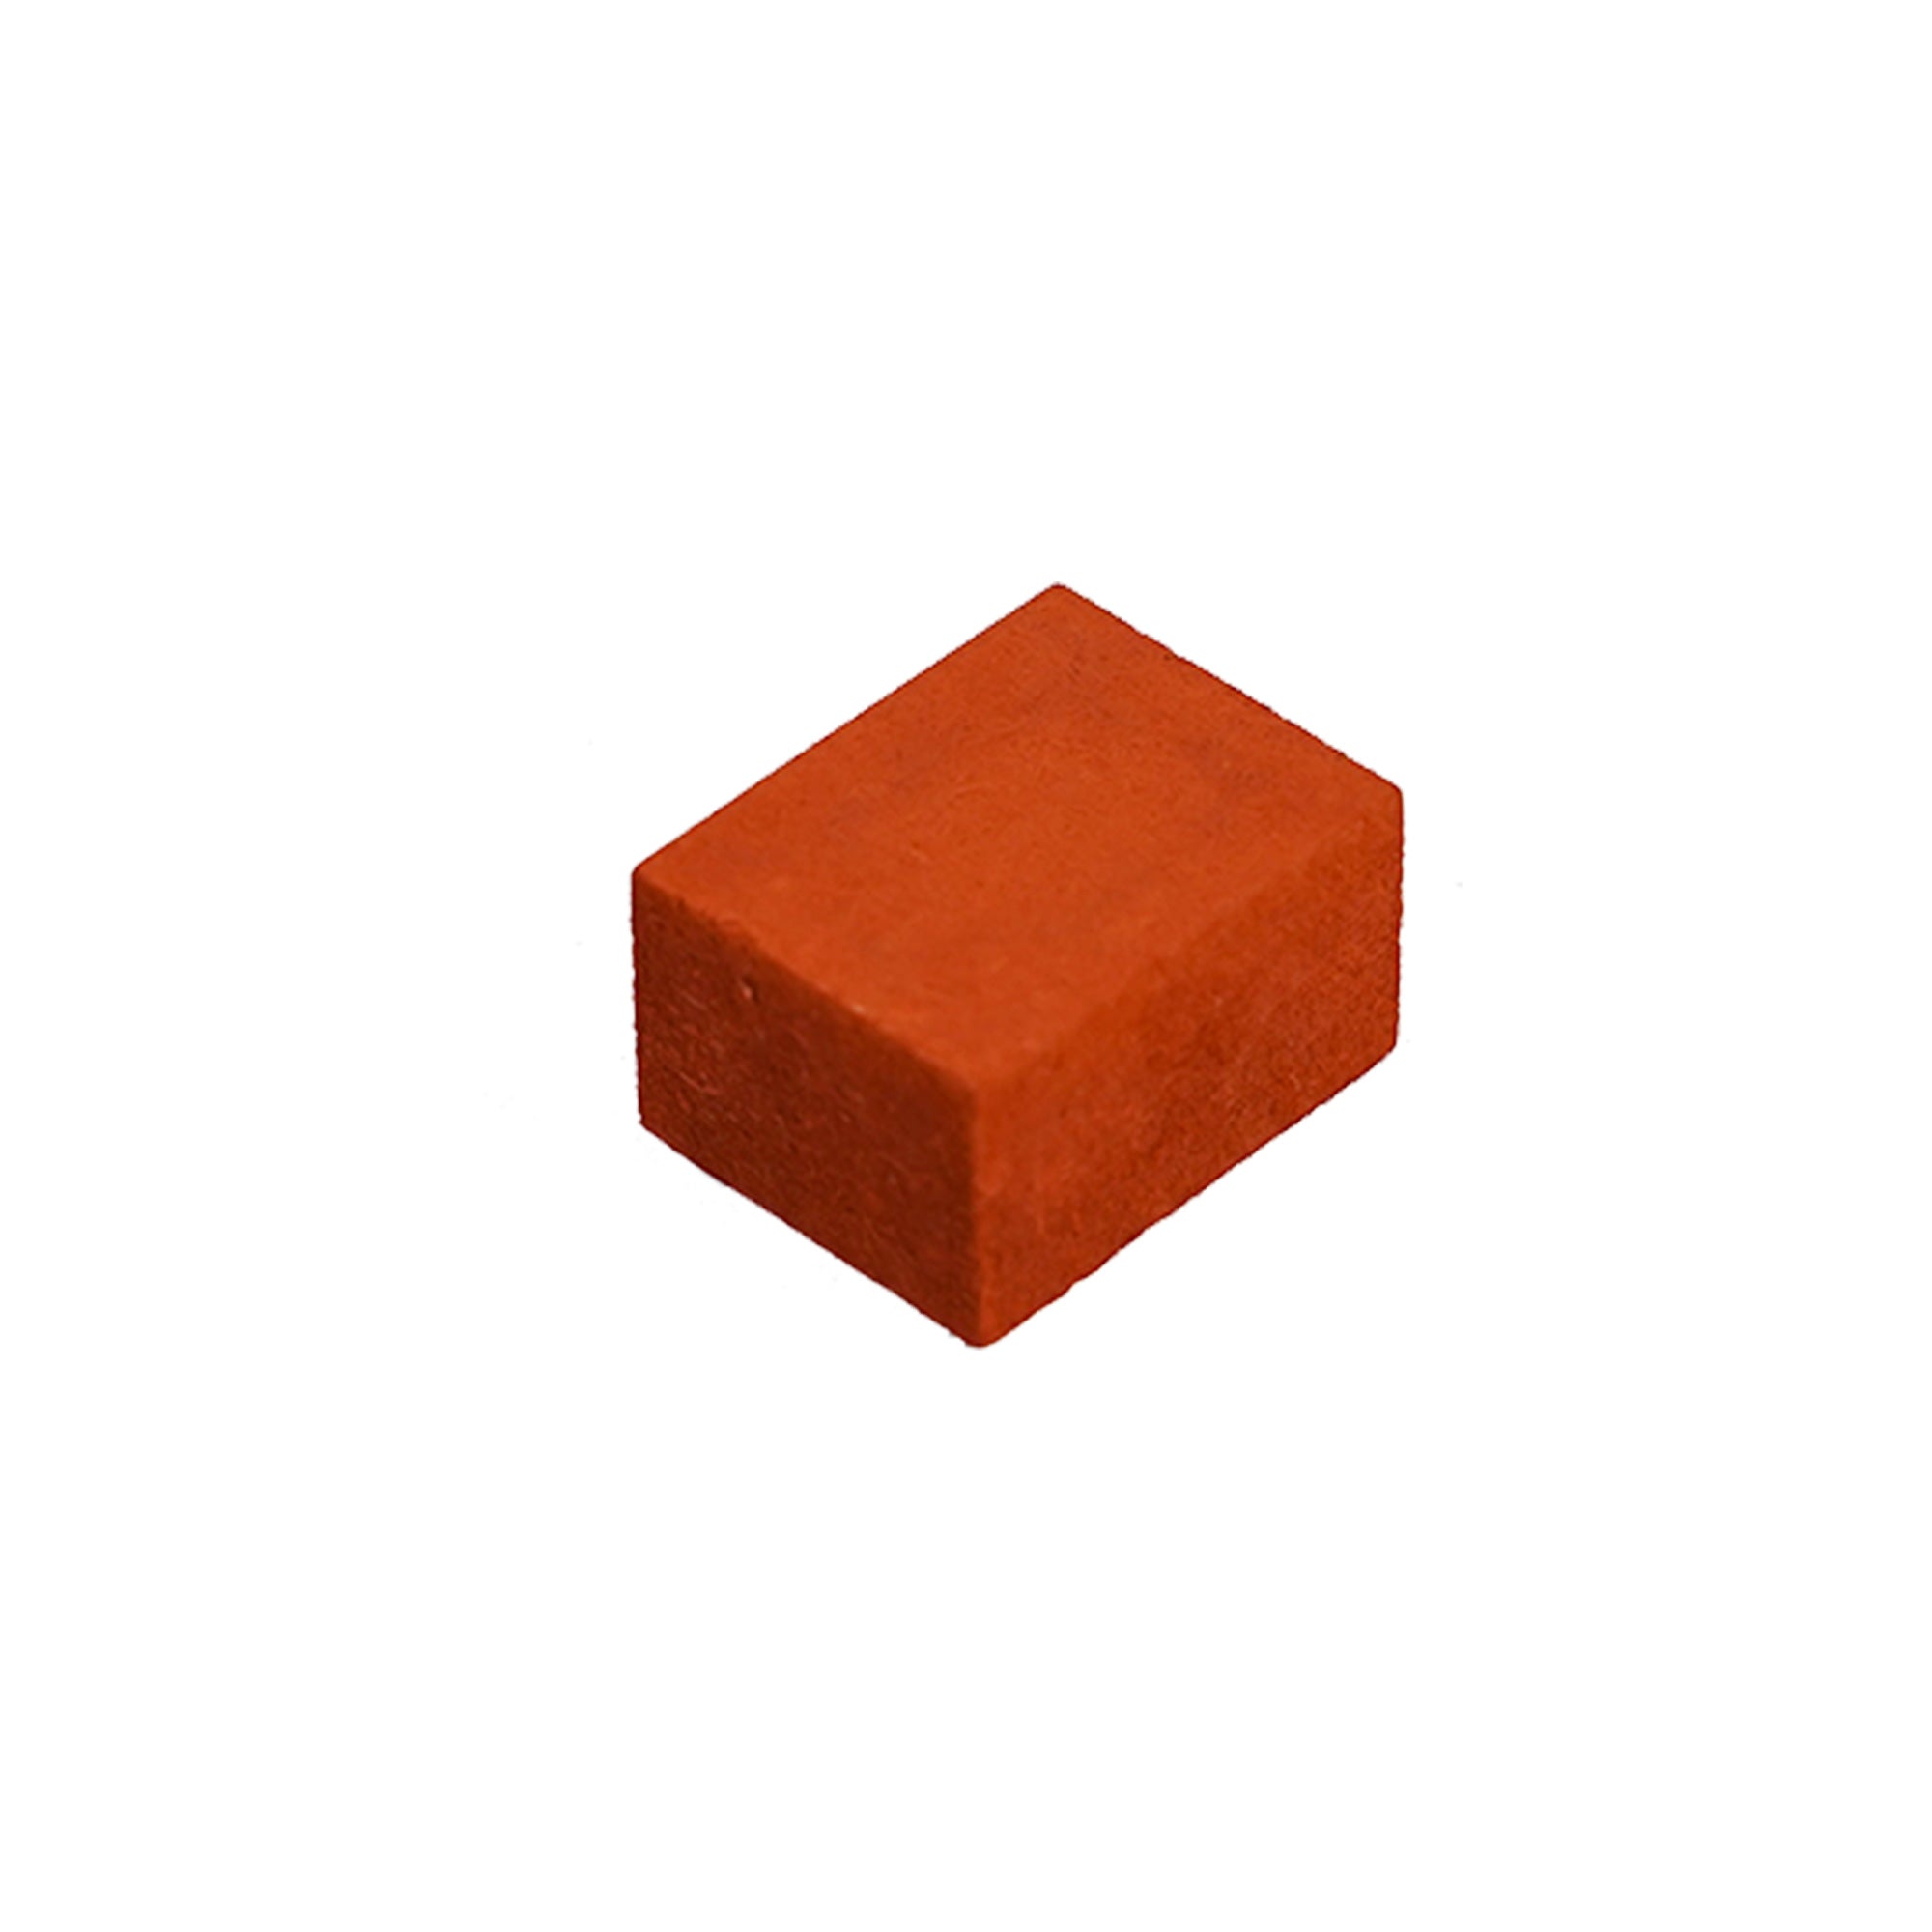 Build A Home Mdf Foundation Bricks W16 X H21 X D 12 mm 100pc